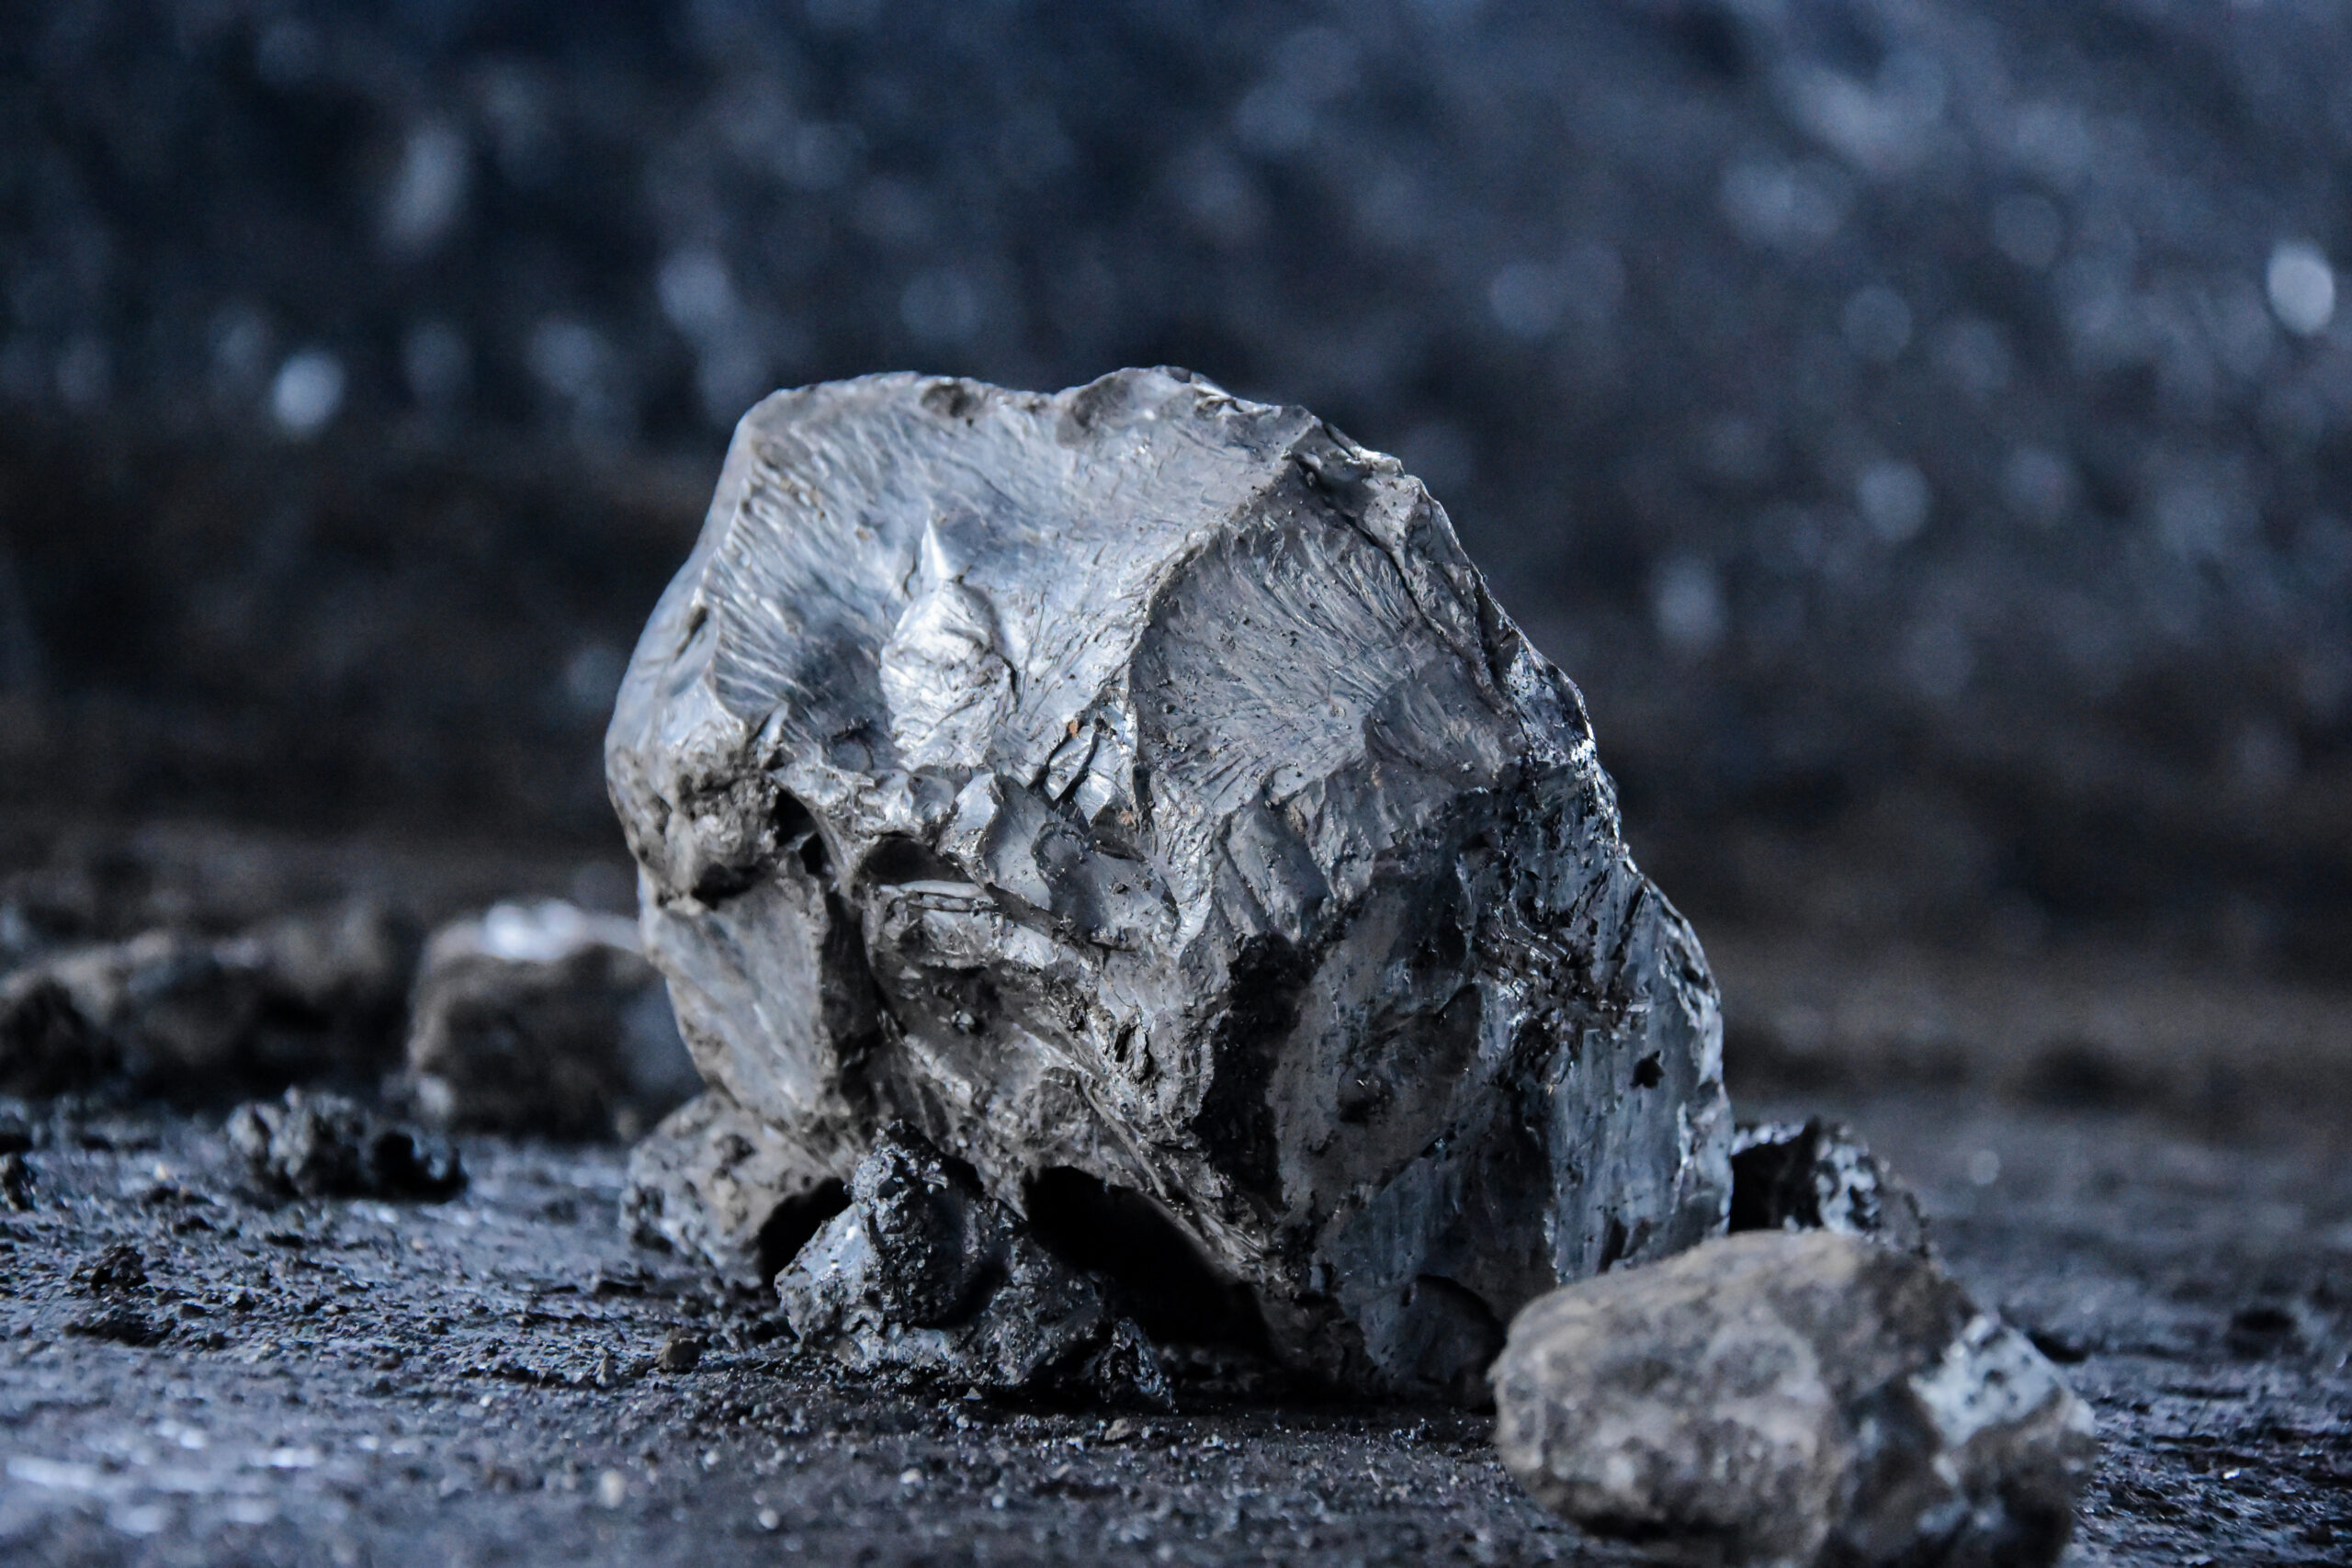 Rawalwasia Group - Coal